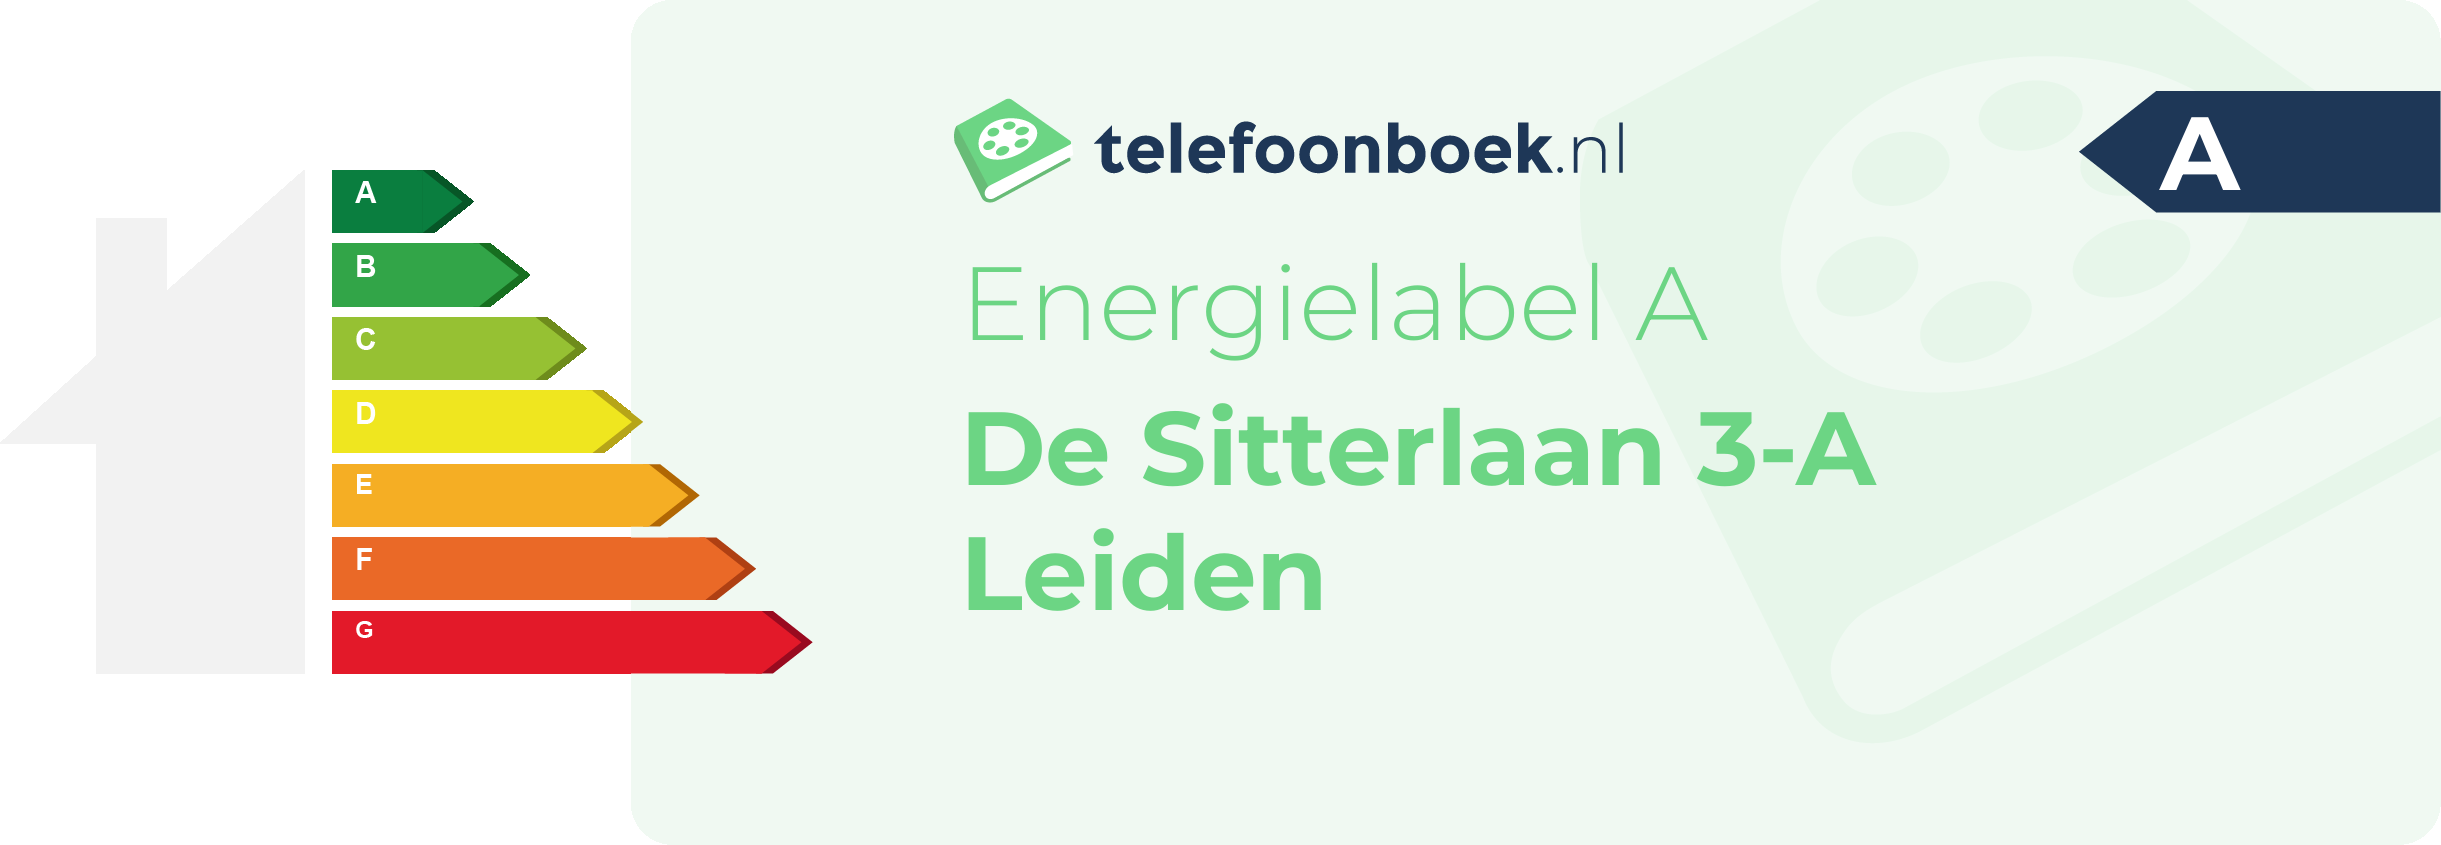 Energielabel De Sitterlaan 3-A Leiden